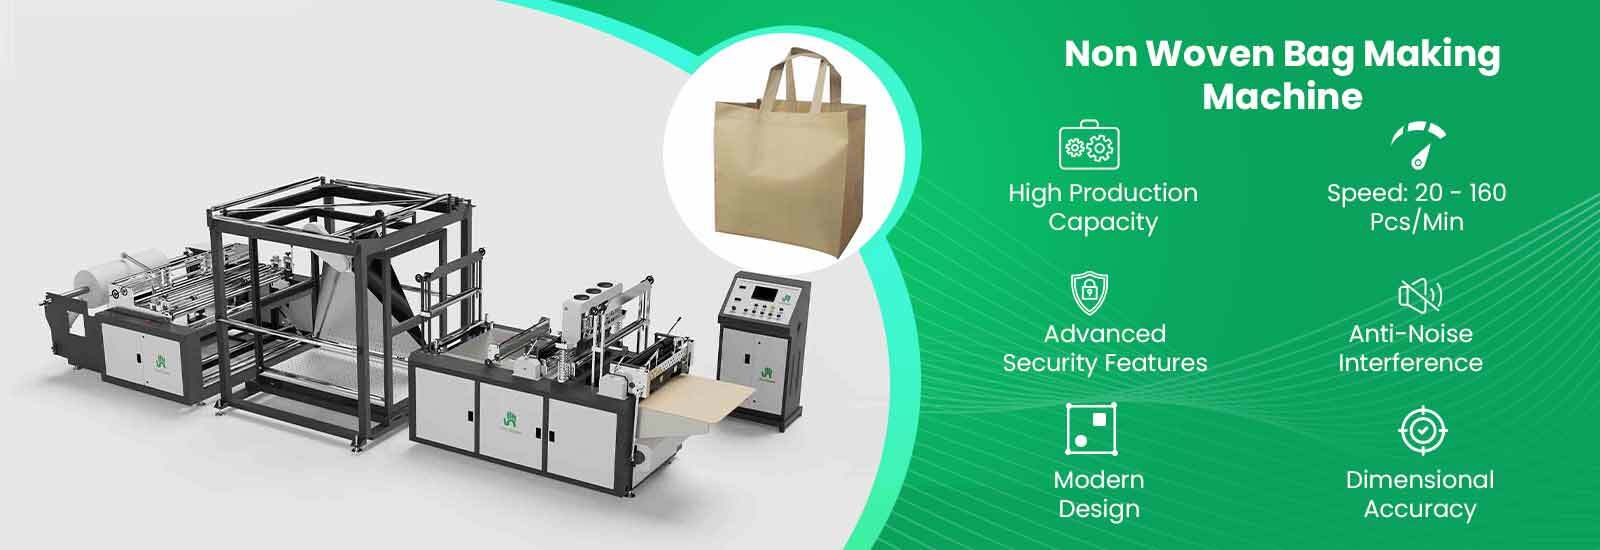 non woven bag making machine price in India